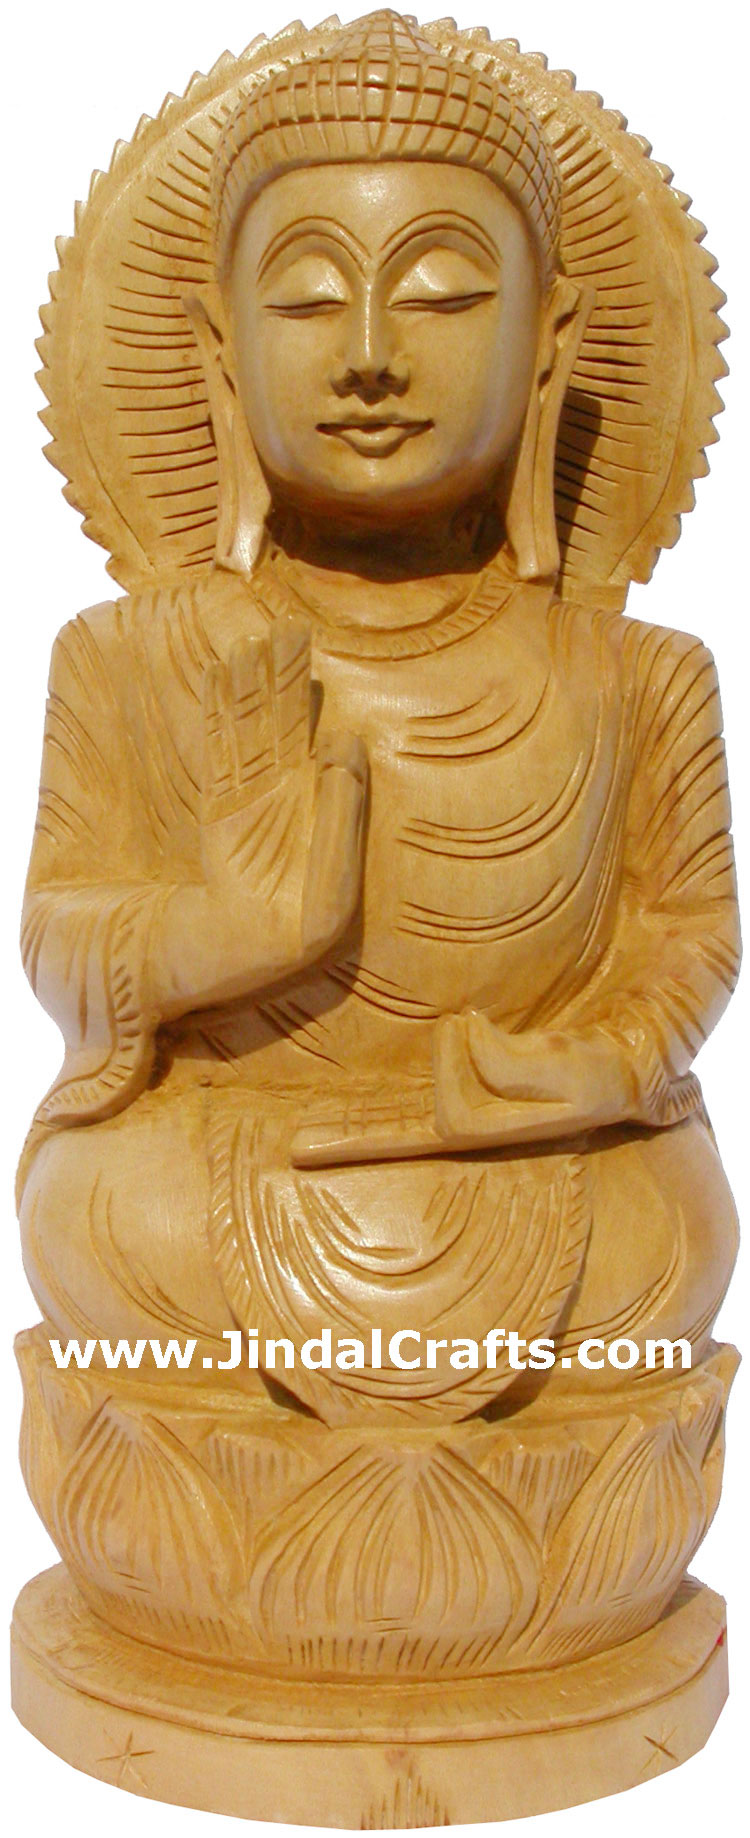 Handmade Sculpture Gautam Buddha Figurine Indian Art Hand Carved Buddhism Crafts